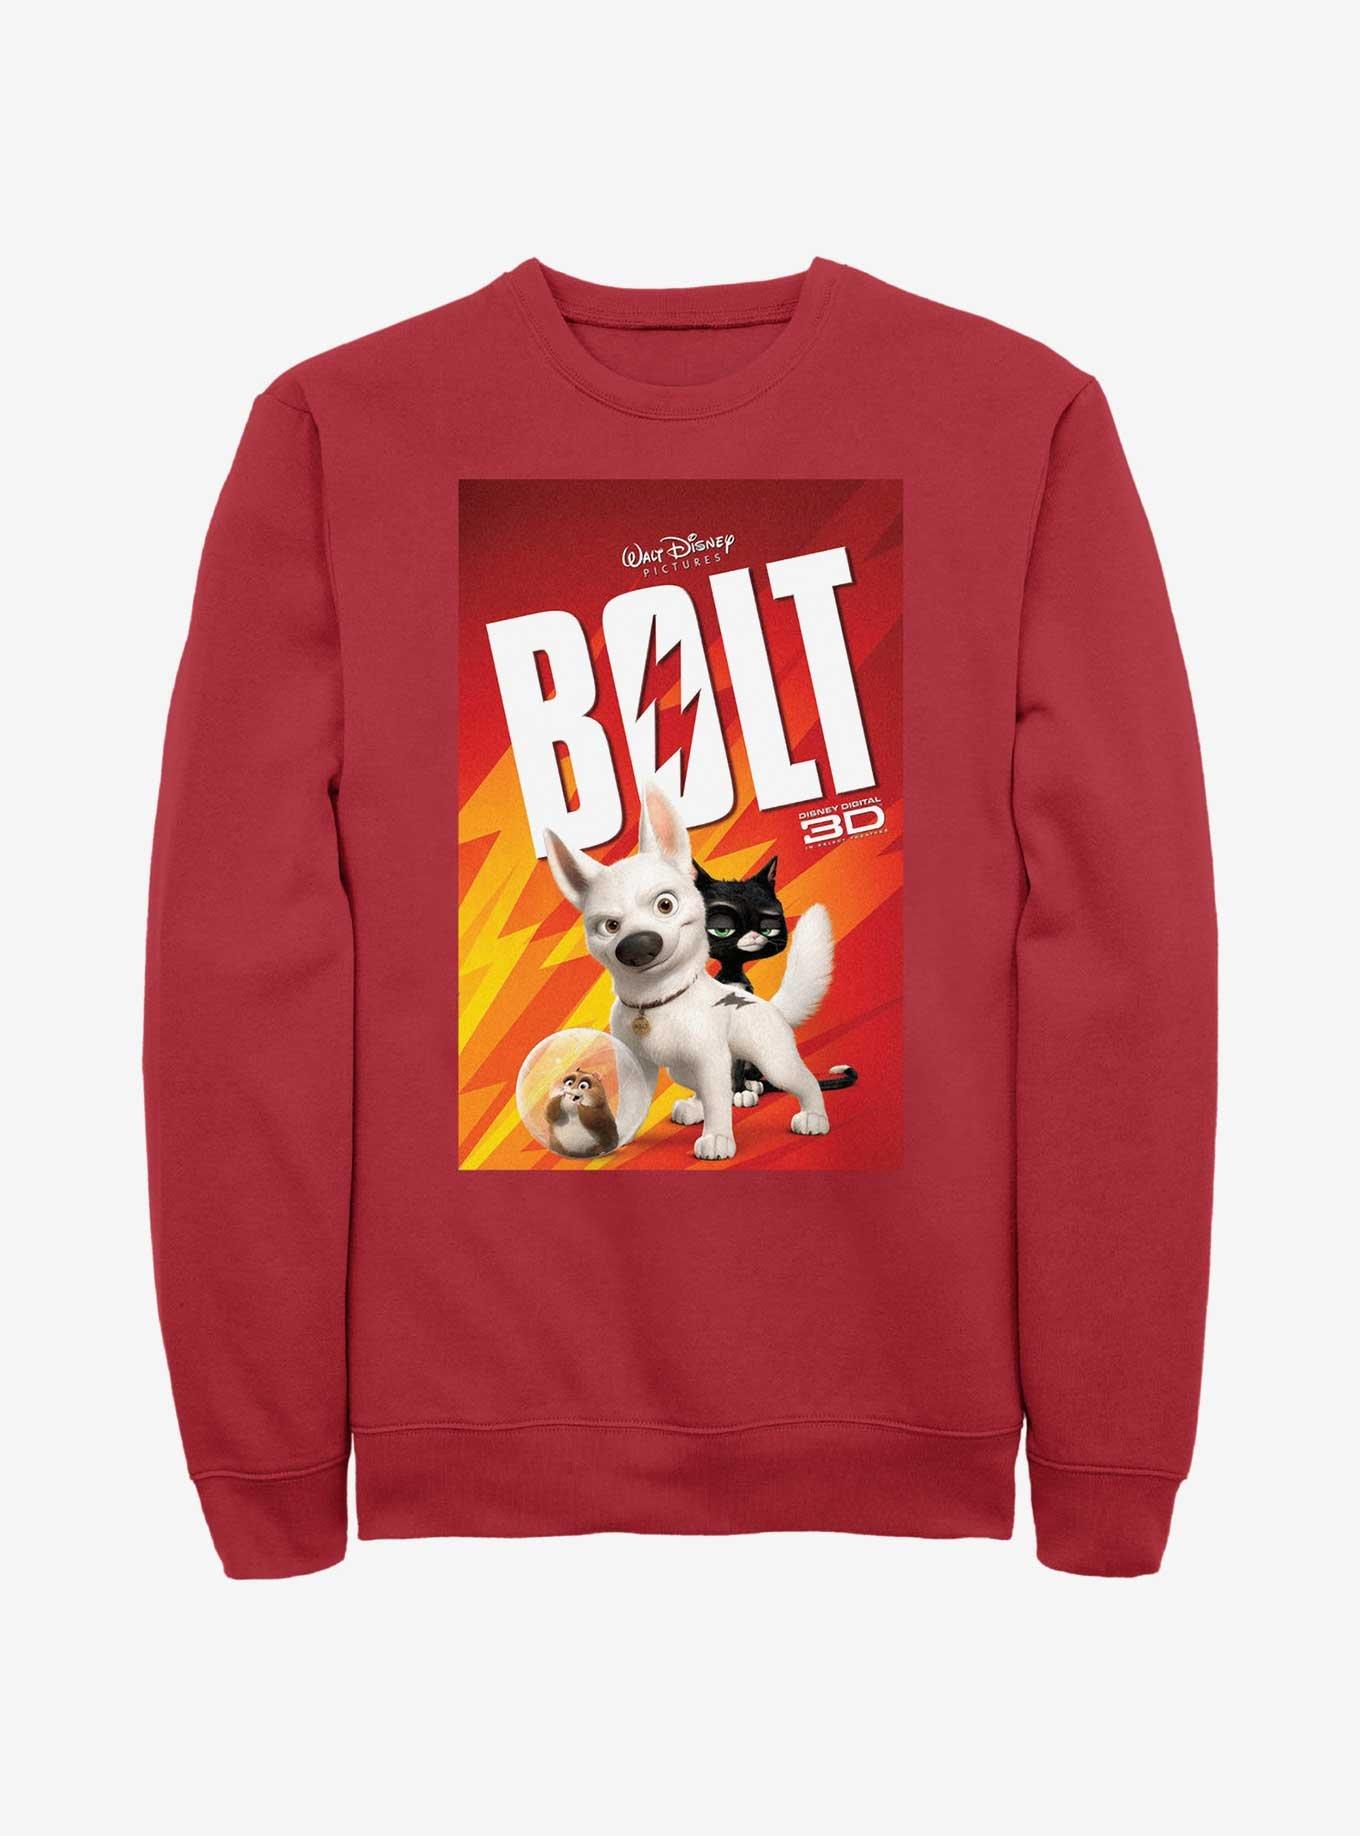 Disney Bolt Movie Poster Sweatshirt